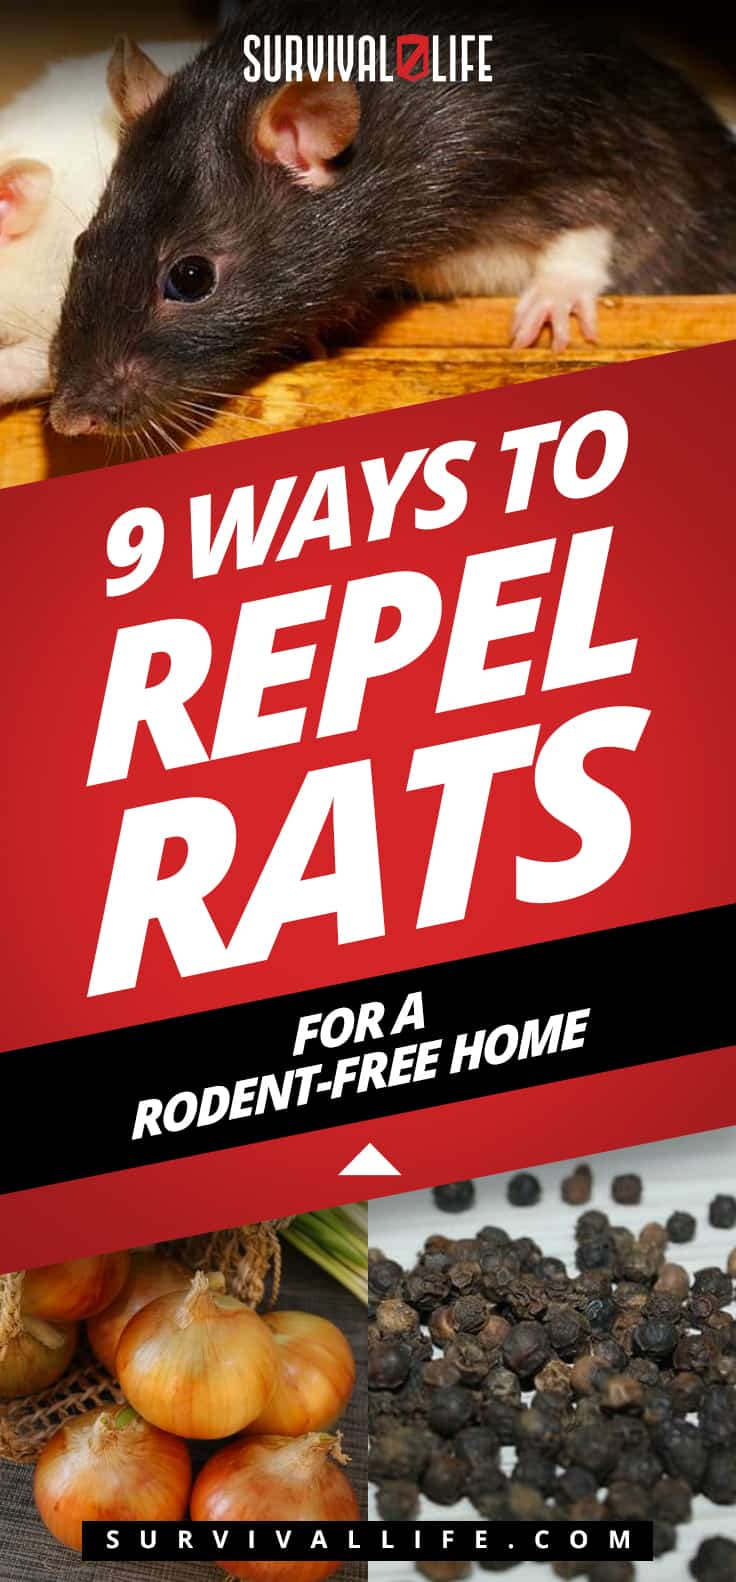 Ways To Repel Rats For A Rodent-Free Home | https://survivallife.com/repel-rats/